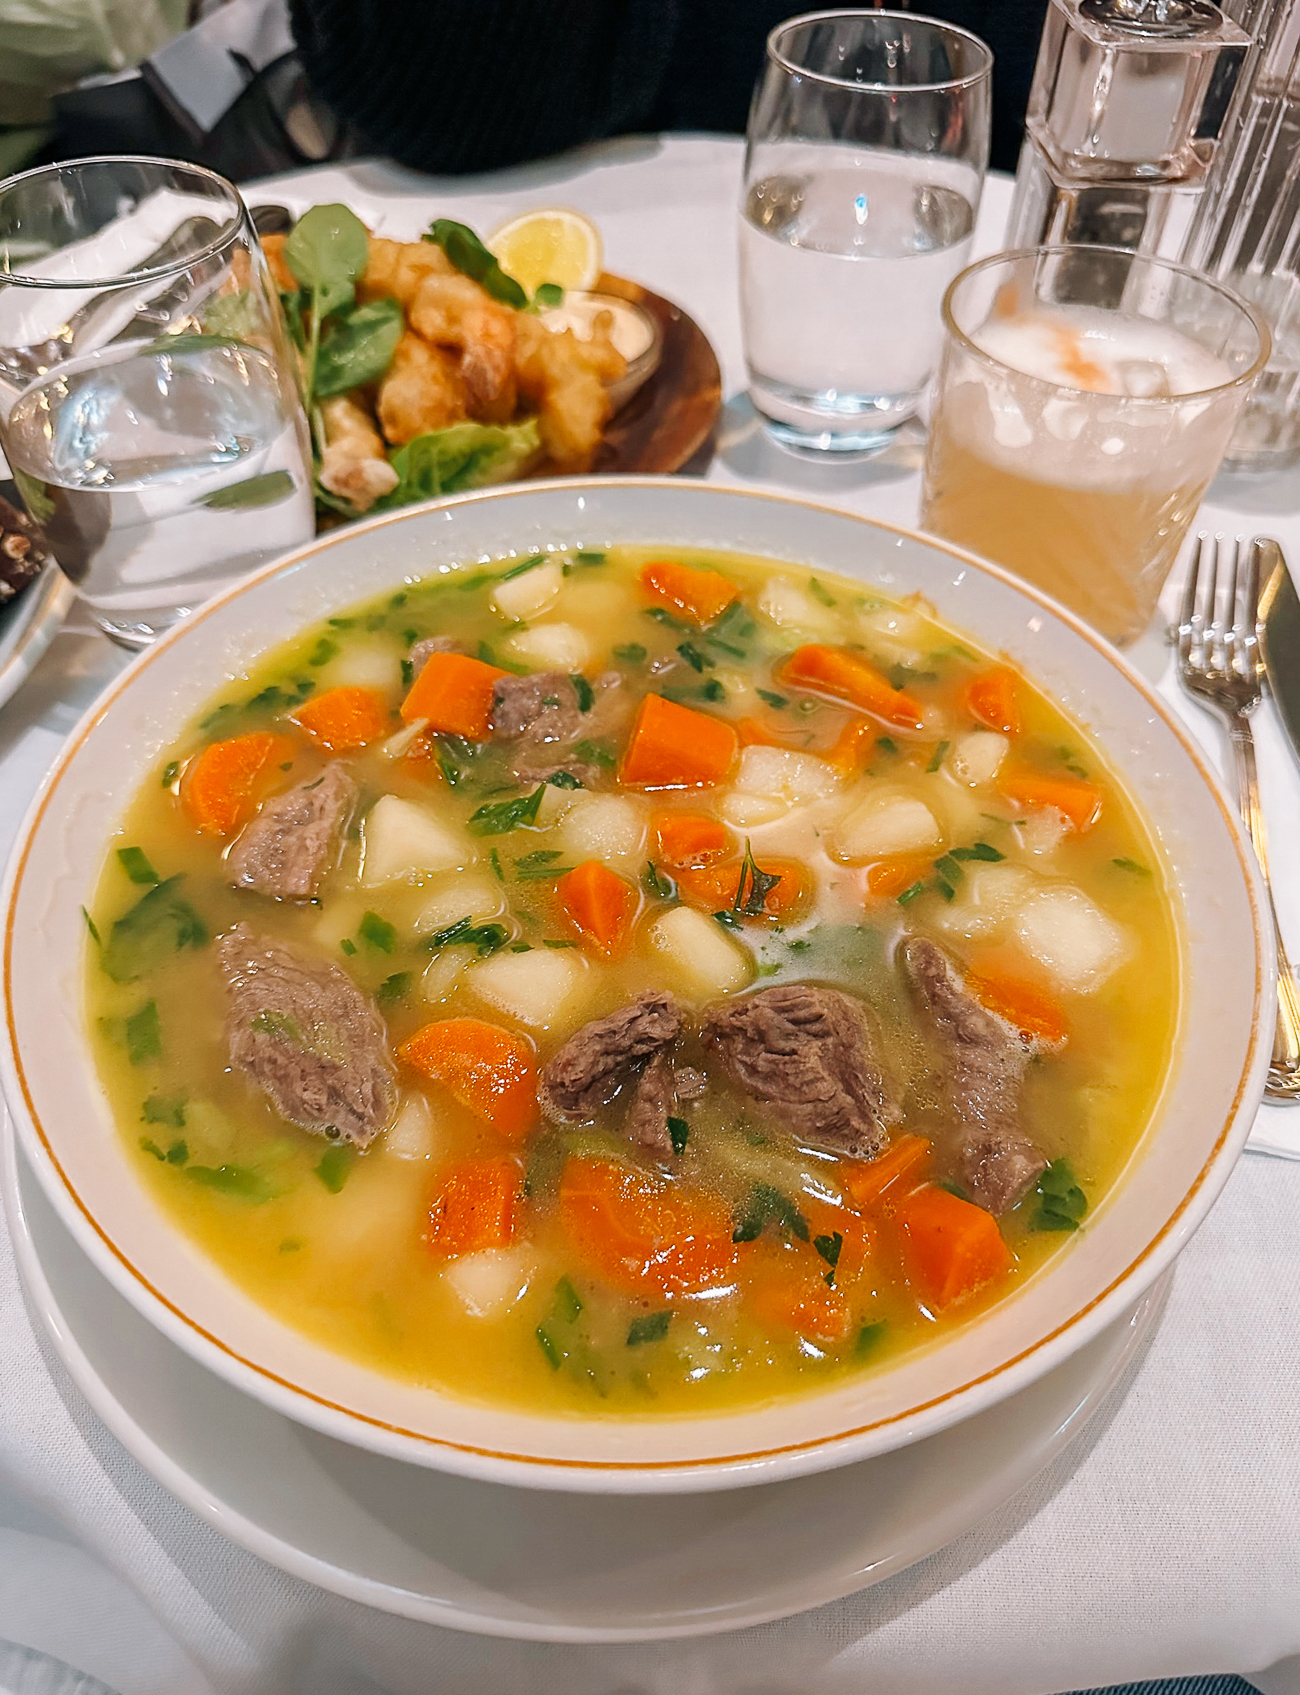 Lamb Stew at Davy Byrnes restaurant in Dublin